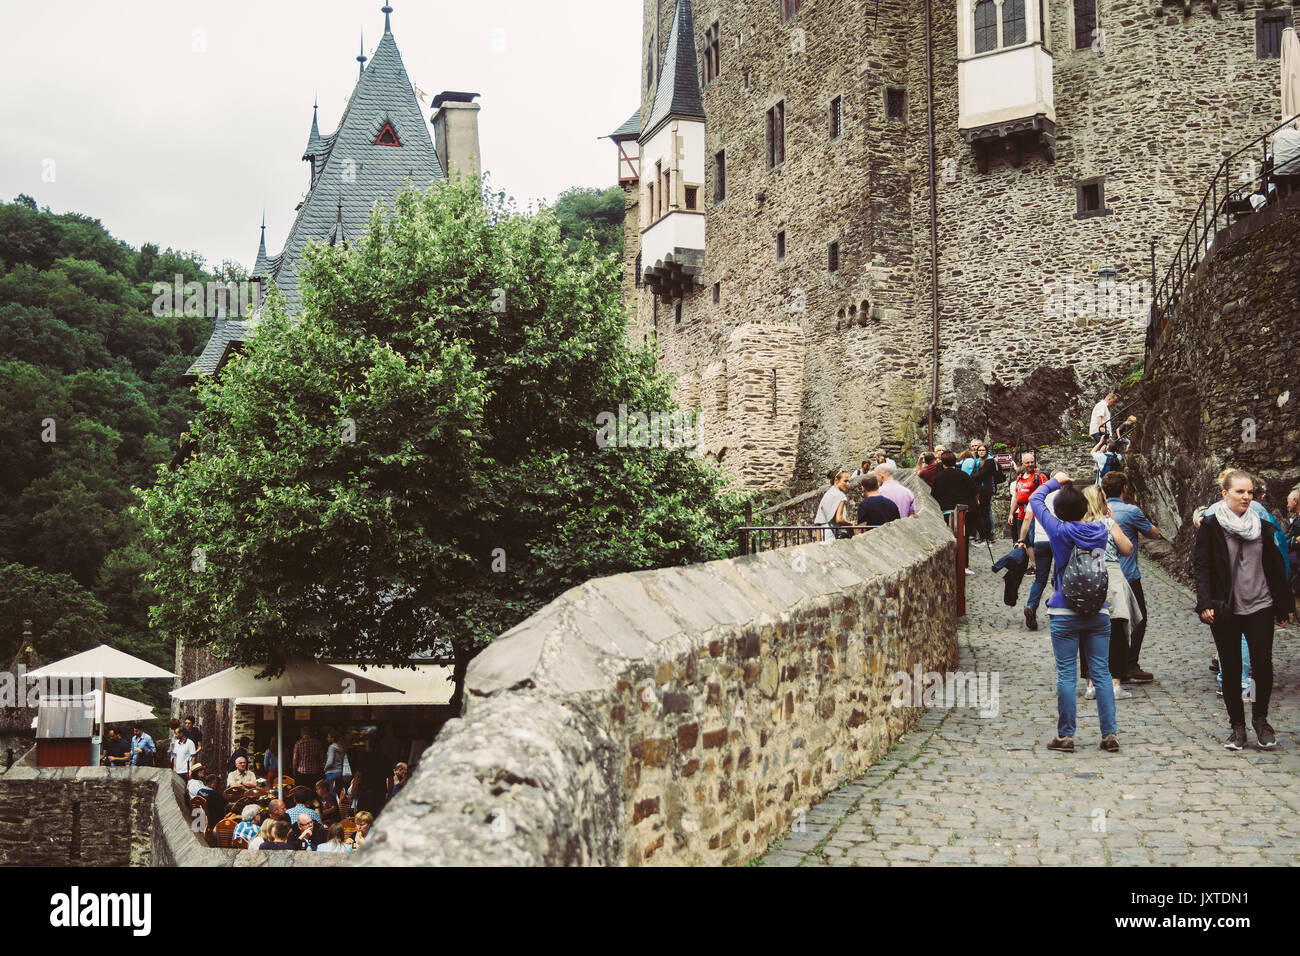 Tourists visiting the Burg Eltz castle in Wierschem, Germany. Stock Photo